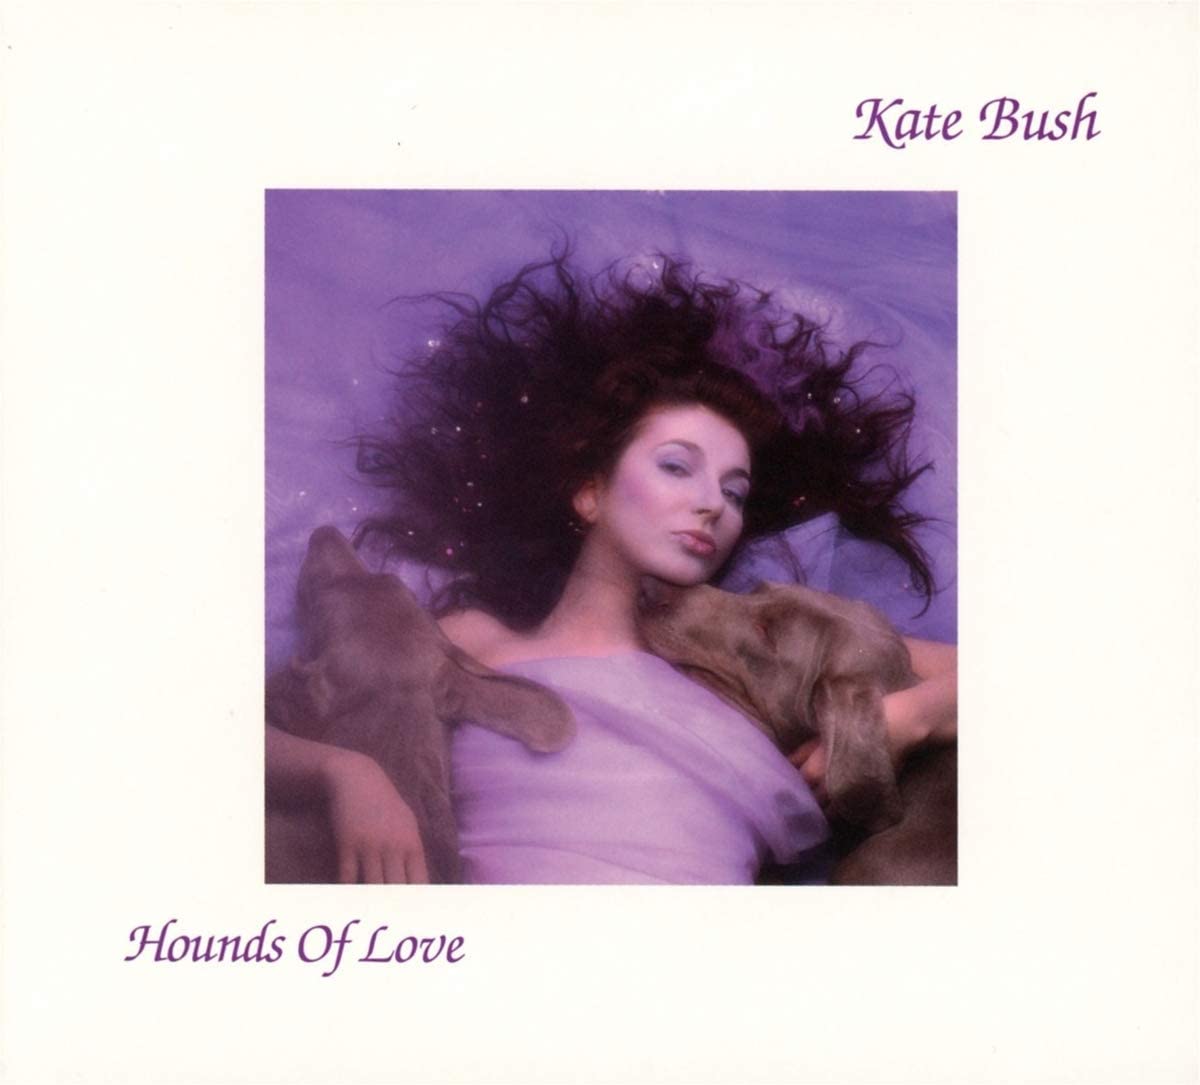 Bush, Kate/Hounds Of Love [CD]